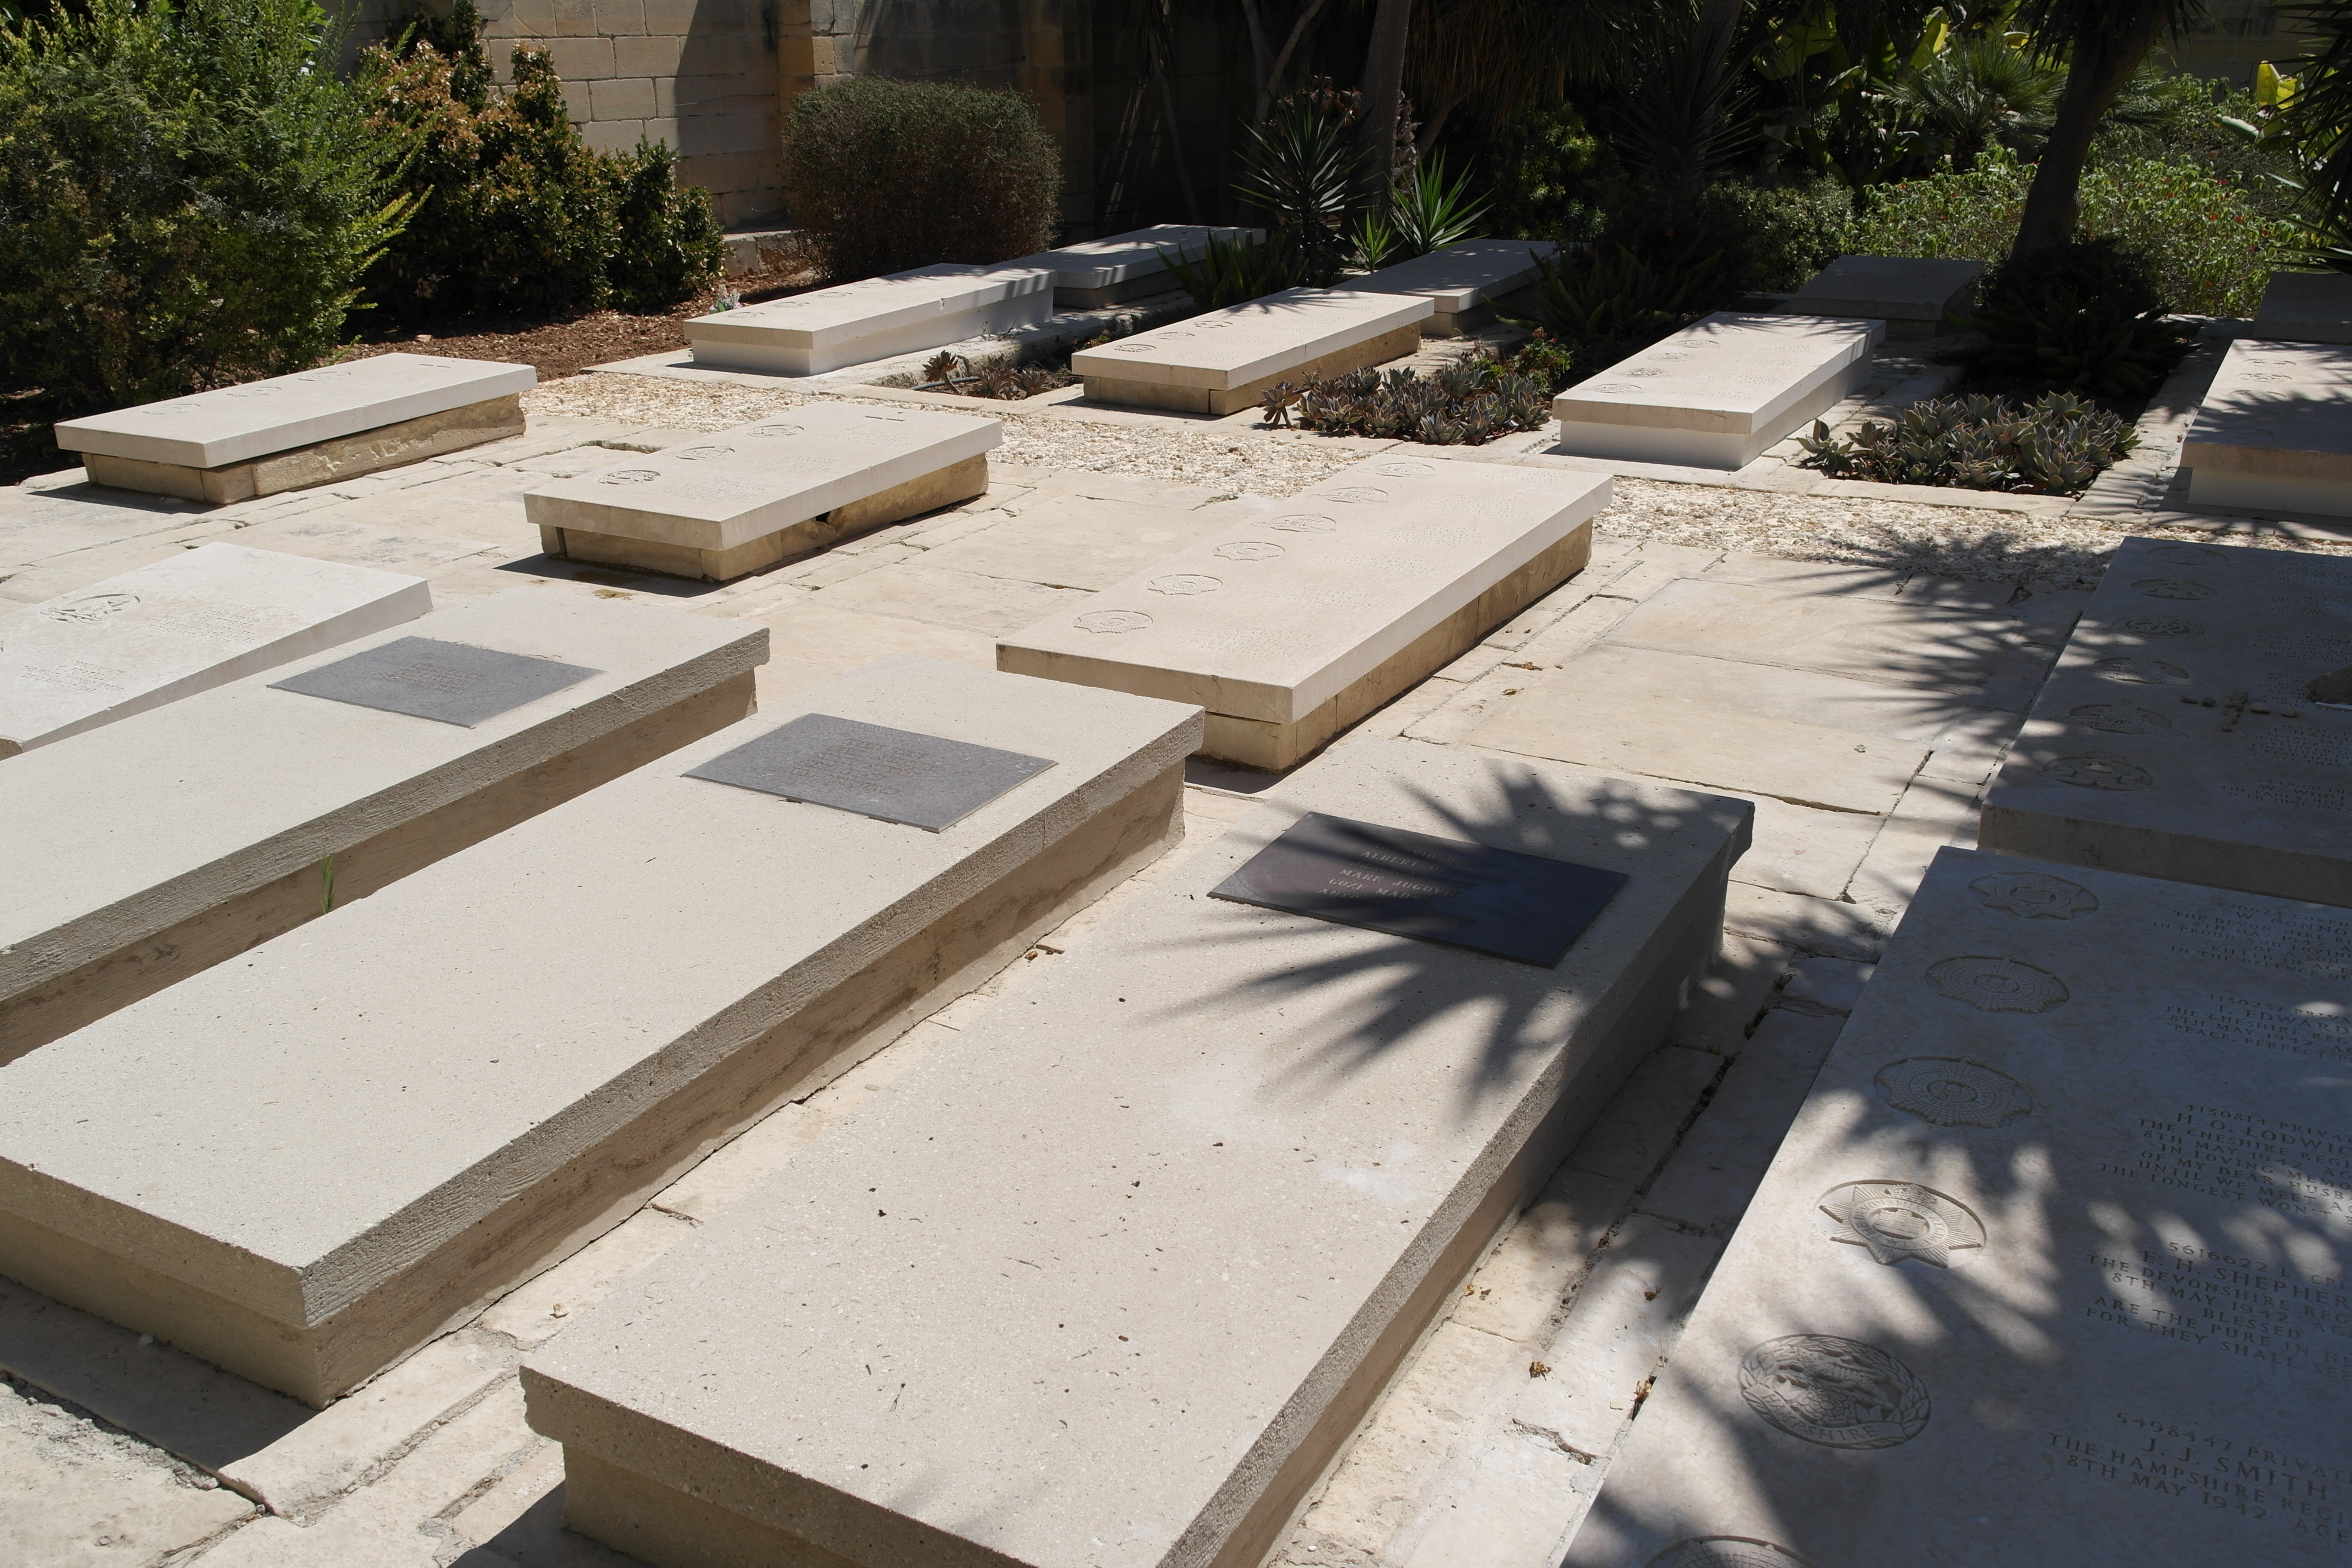 Pieta Military Cemetery, Malta